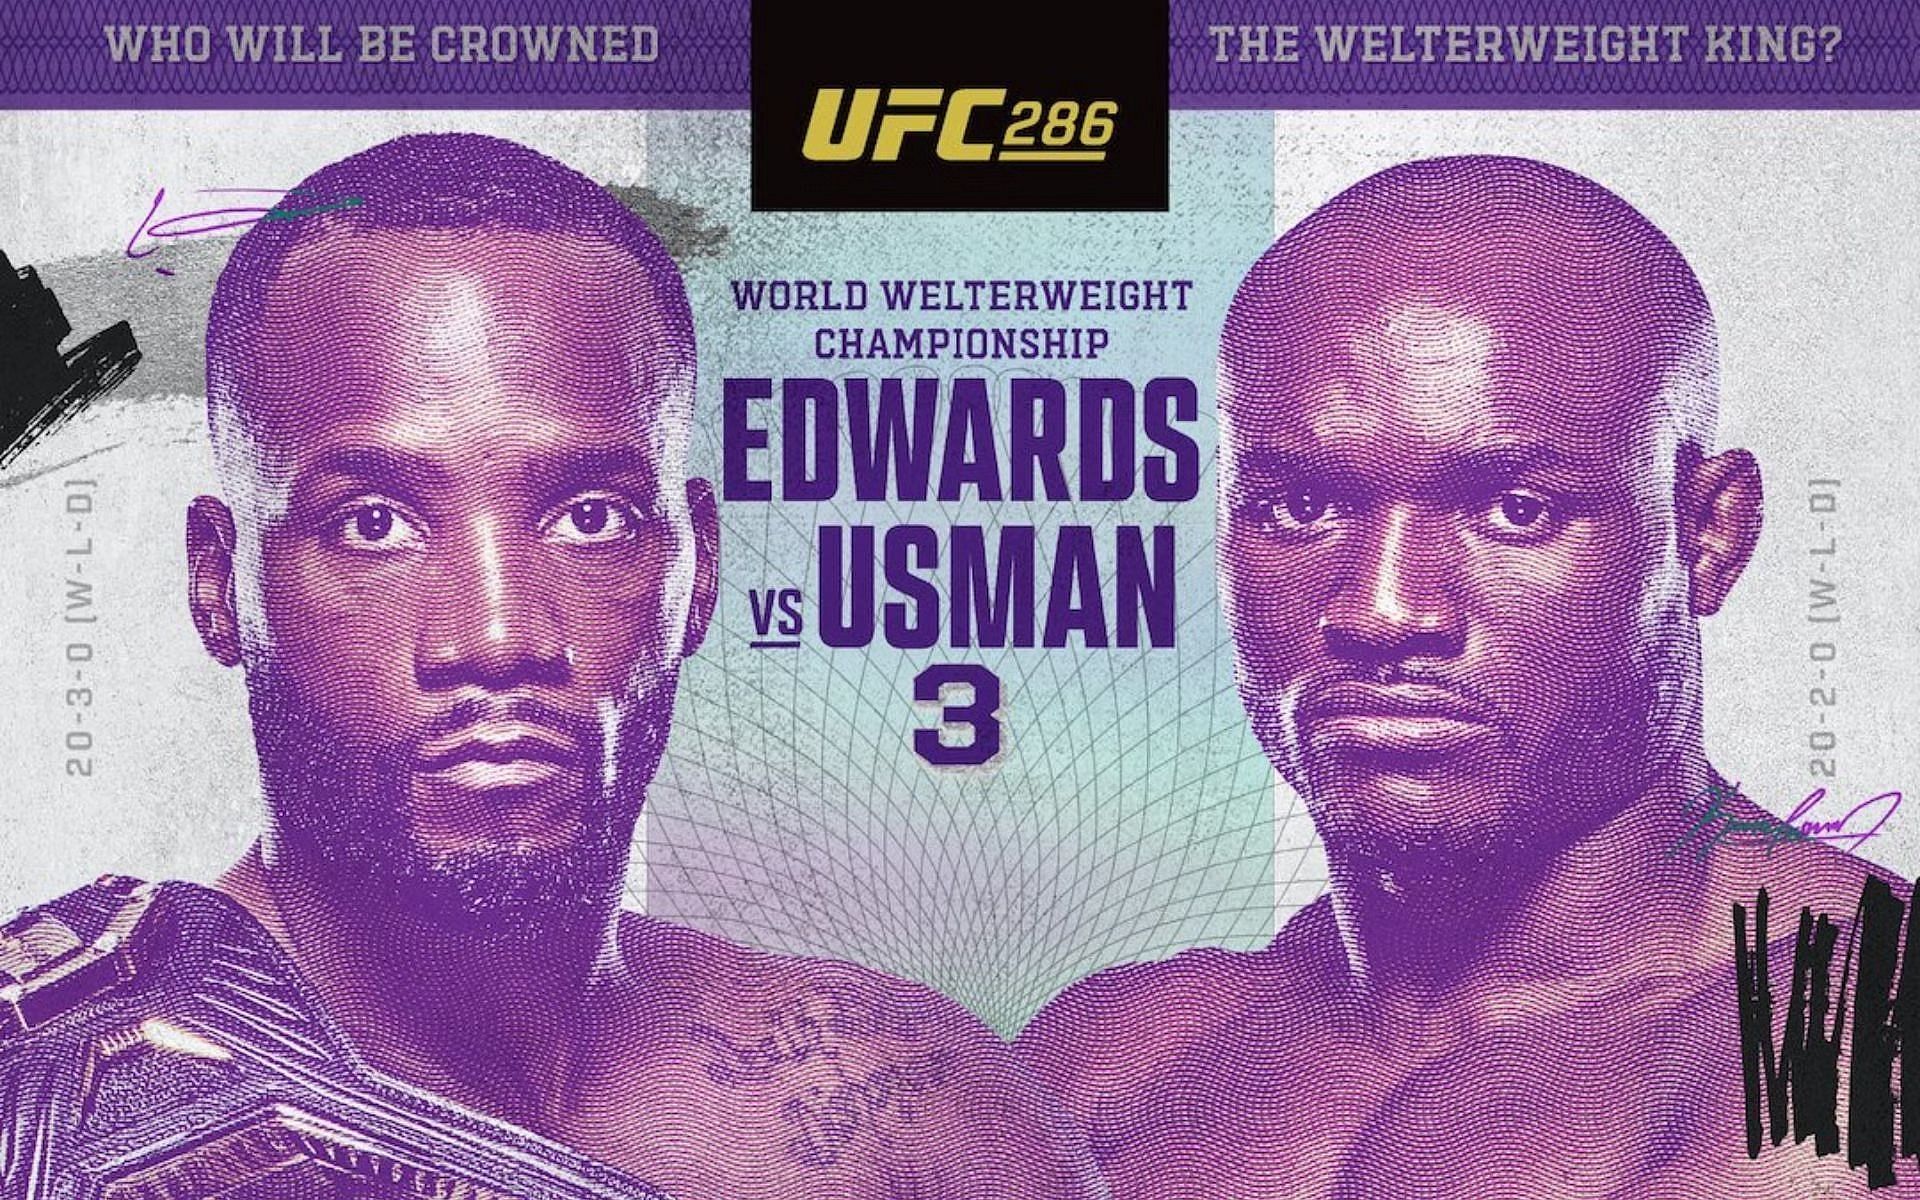 UFC 286 features a huge main event of Leon Edwards vs. Kamaru Usman